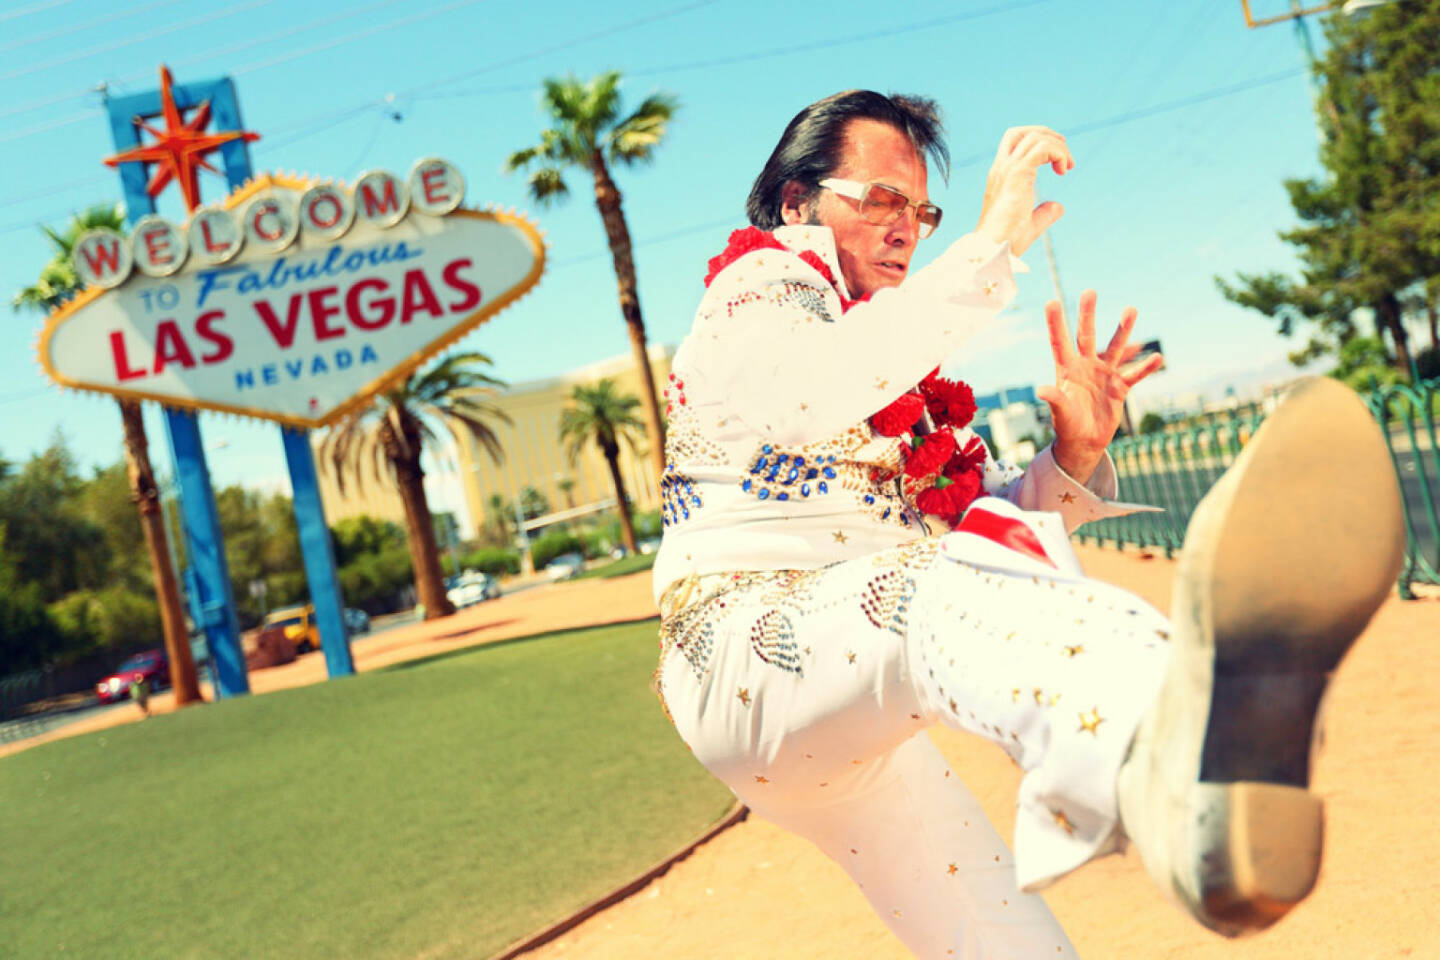 Las Vegas, Elvis, Nevada, USA, Casino, Glücksspiel, gaming, Lotto, Glück, Pech, http://www.shutterstock.com/de/pic-149492234/stock-photo-elvis-look-alike-impersonator-man-in-front-of-welcome-to-fabulous-las-vegas-sign-on-the-strip.html